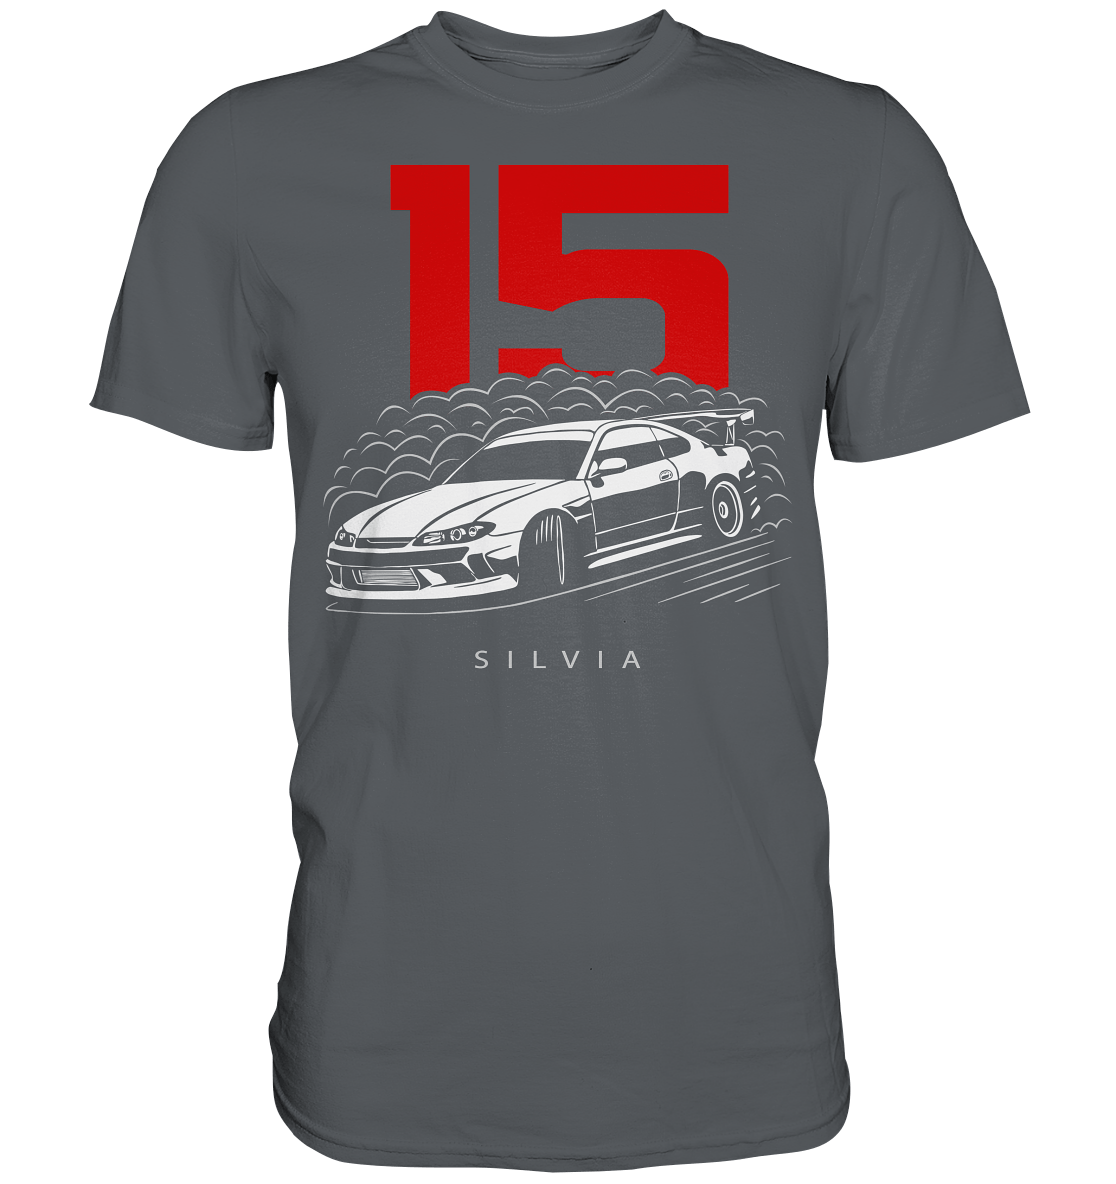 Silvia S15 - Premium Shirt - MotoMerch.de